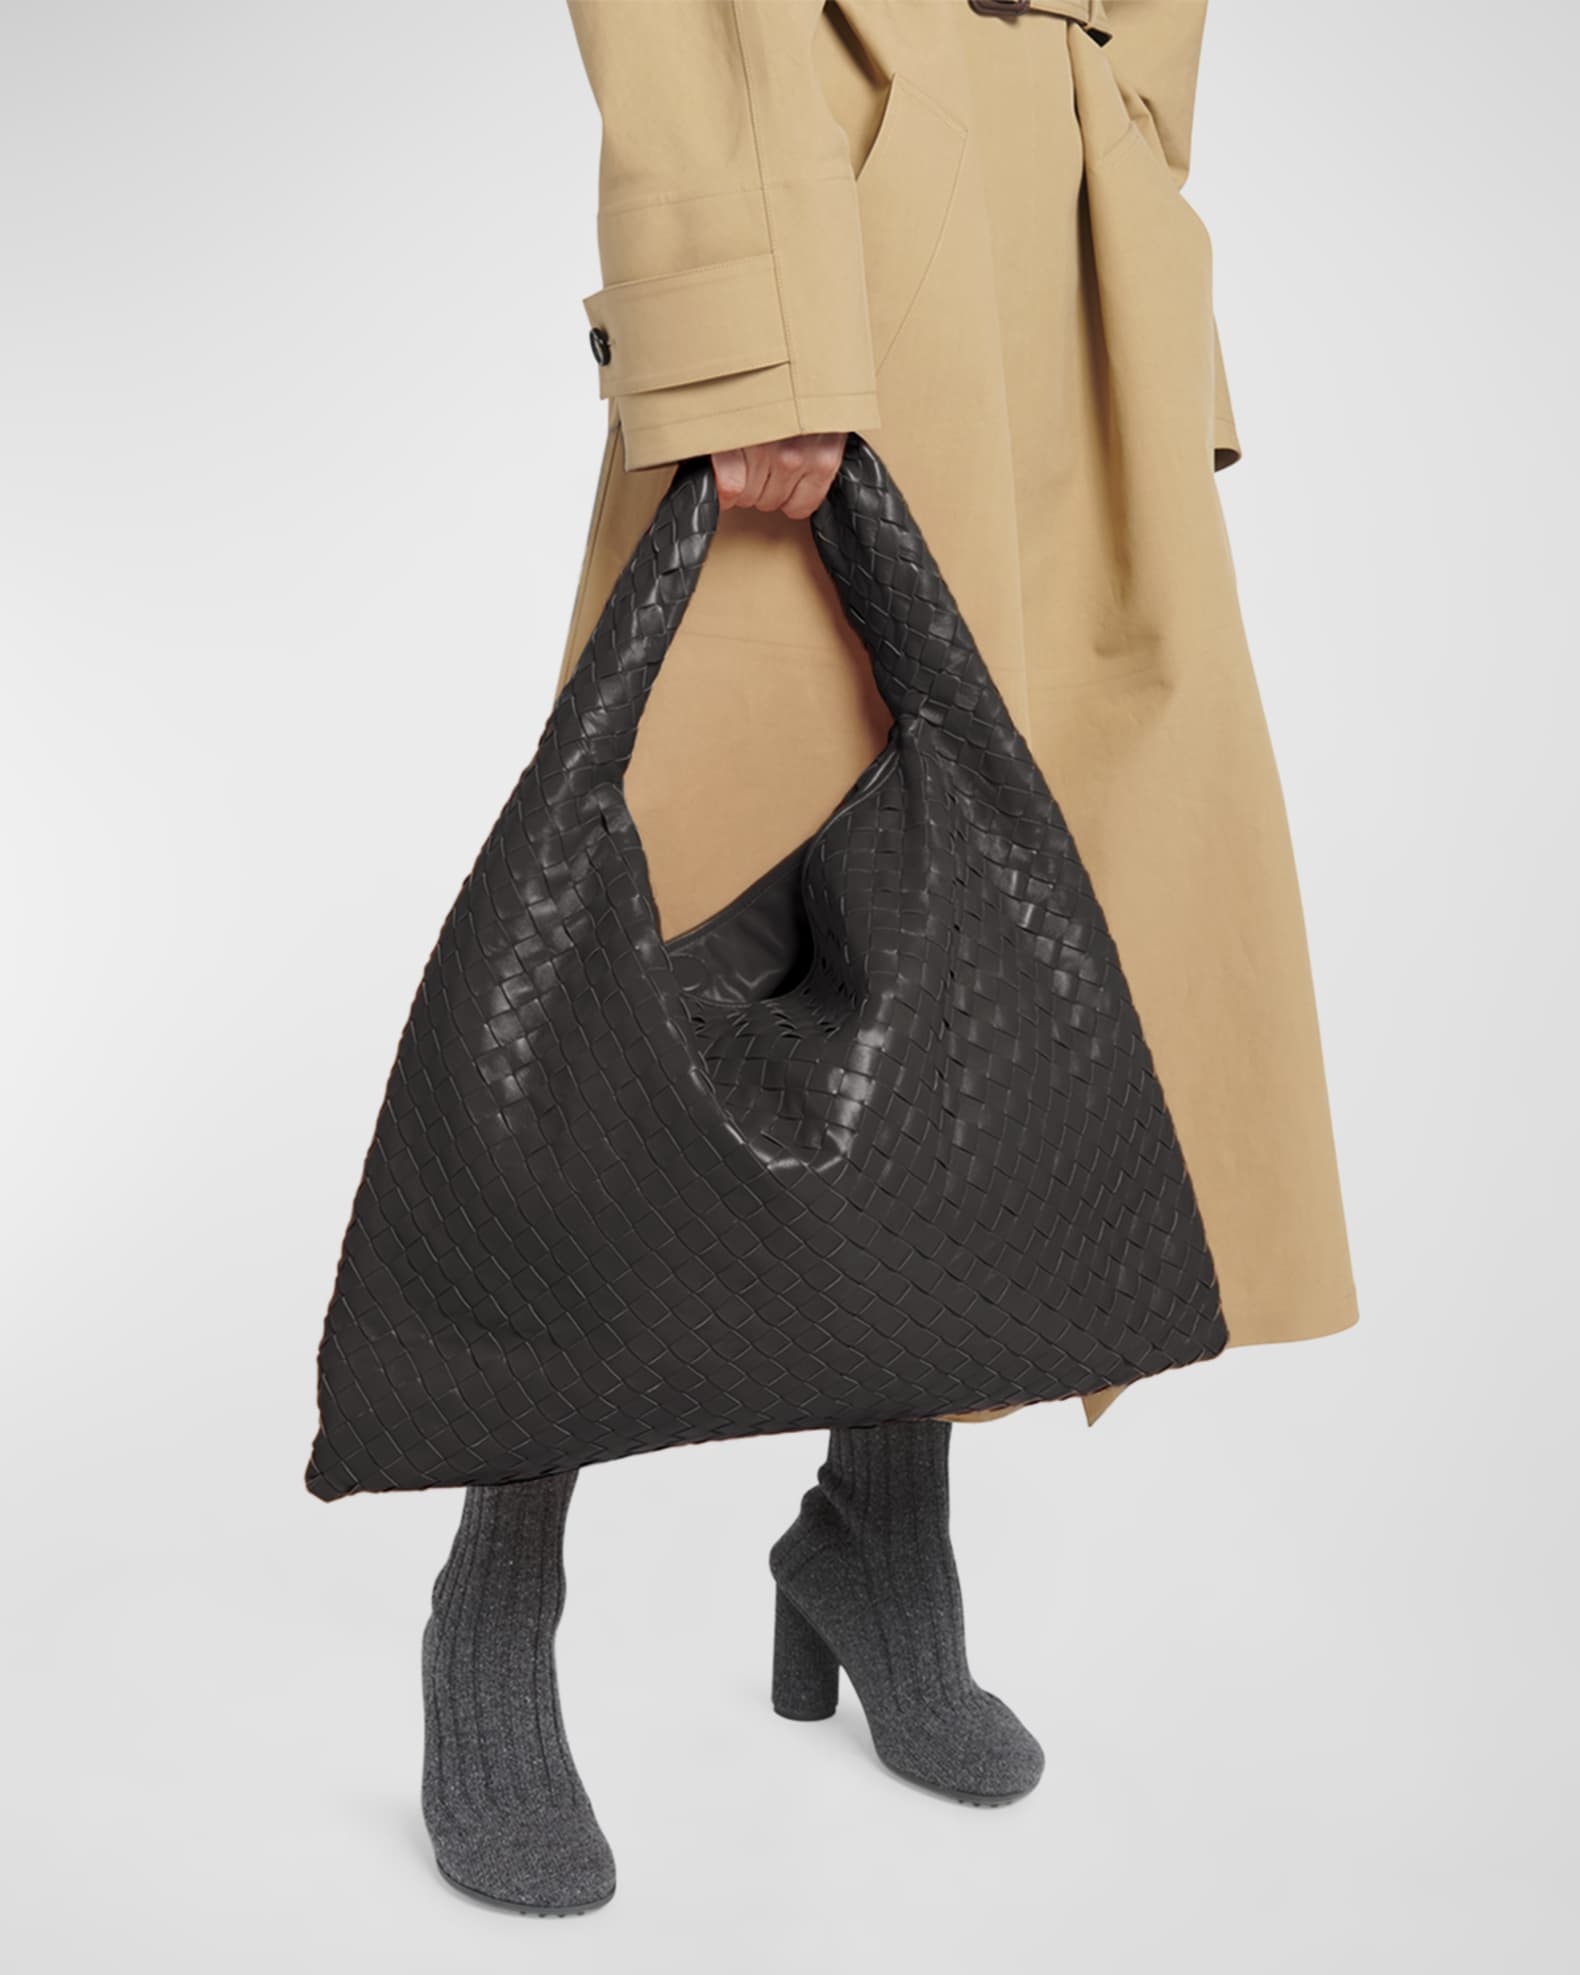 Bottega Veneta® Men's Large Hop Bag in Travertine. Shop online now.